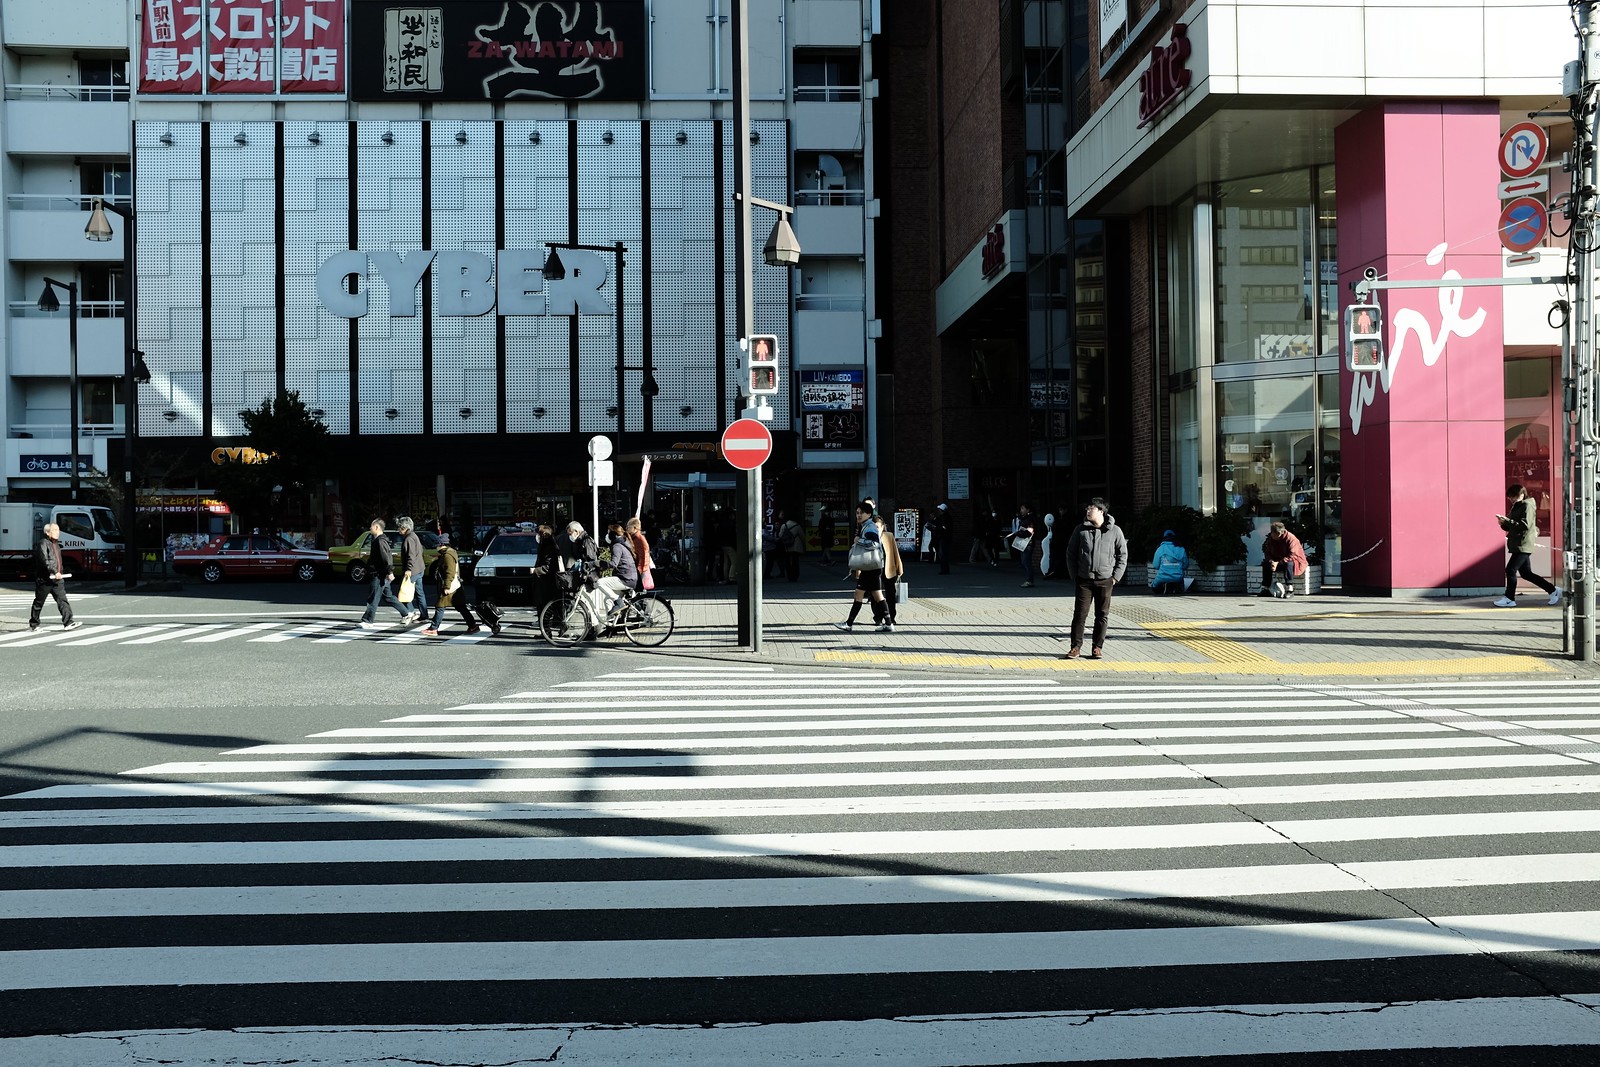 The Tokyo Kameido photo by FUJIFILM X100S.